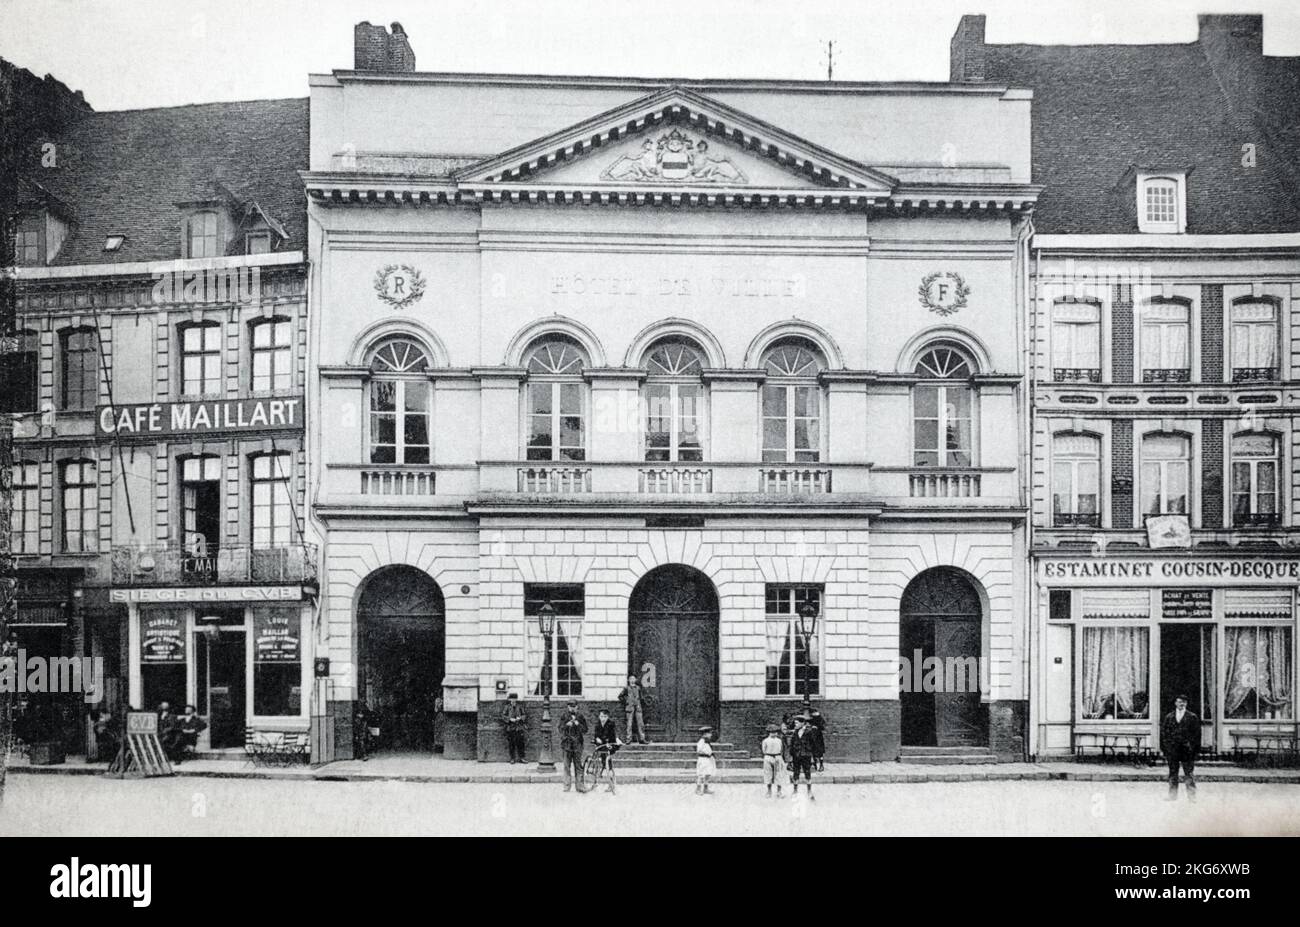 A historical view of Béthune City Hall, Béthune, Pas-de-Calais, France, taken from a postcard c. early 1900s. Stock Photo